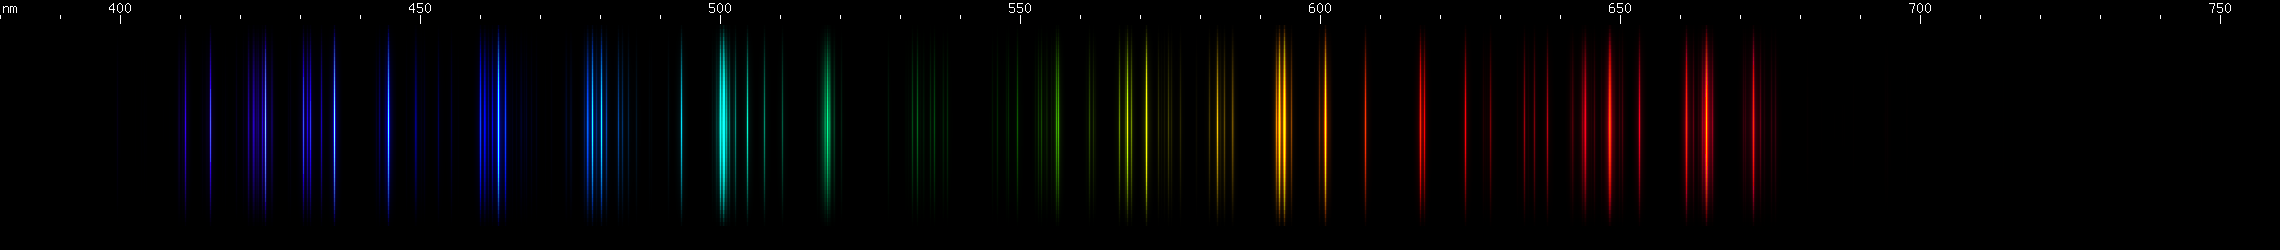 Spectral Lines of Nitrogen